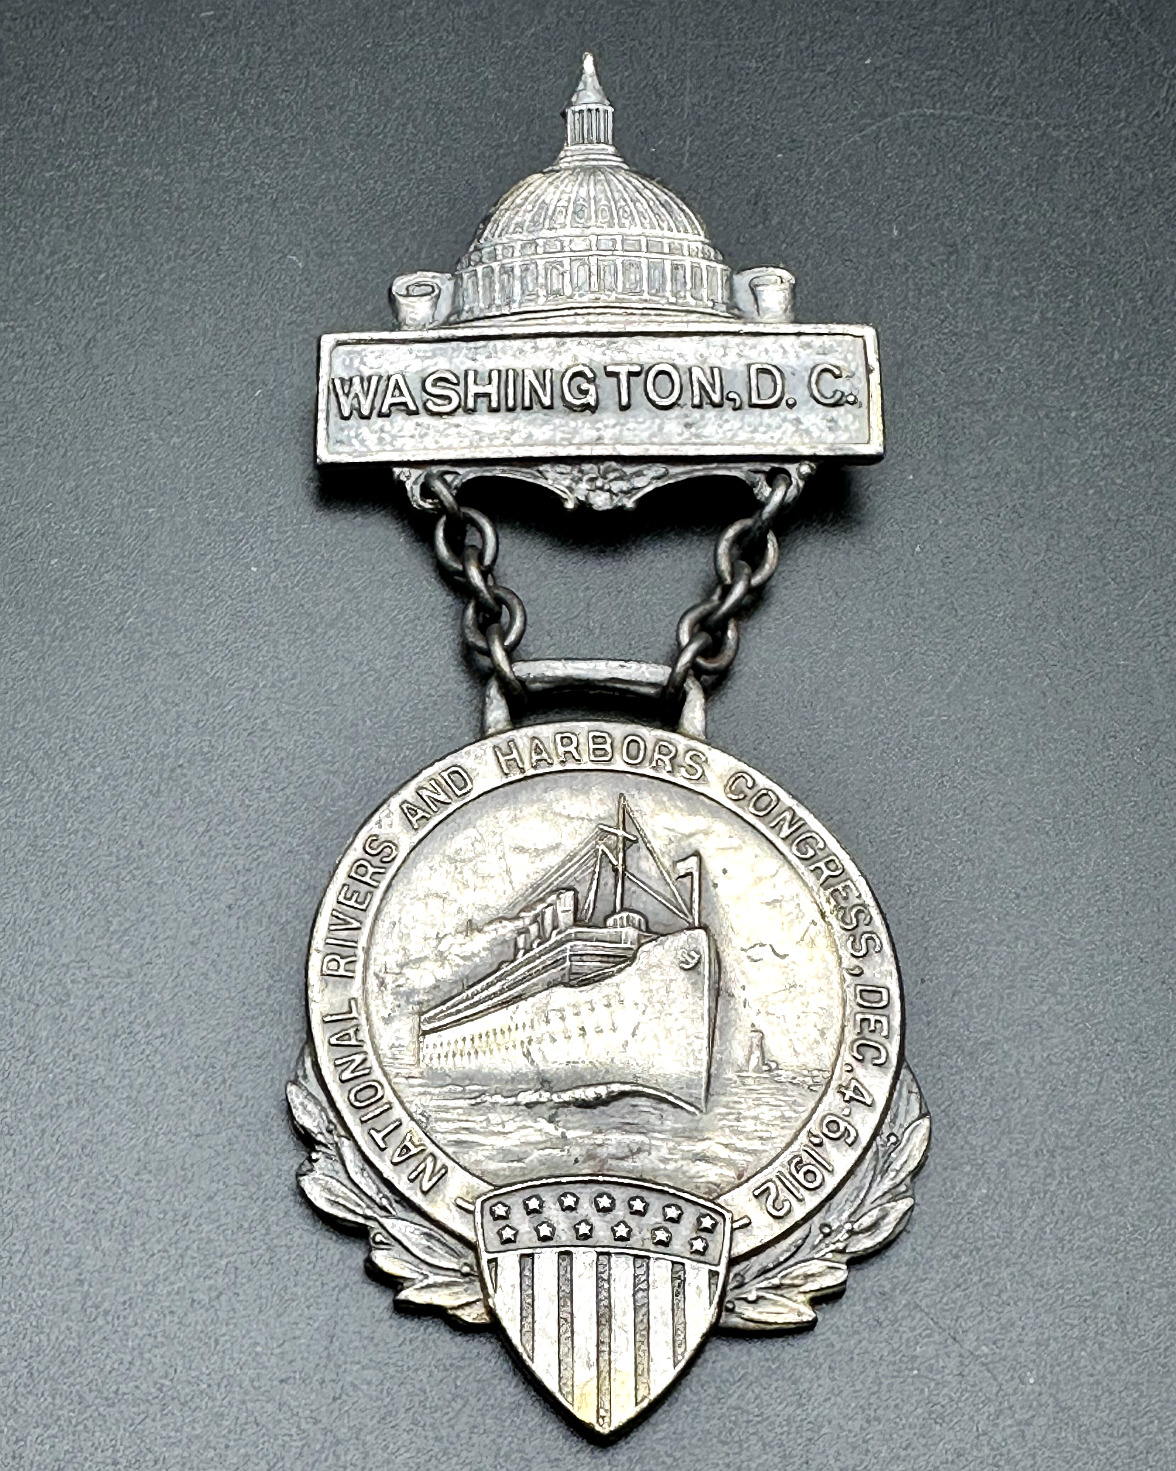 1912 WASHINGTON D.C. NATIONAL RIVERS & HARBORS CONGRESS BADGE MEDAL - L817